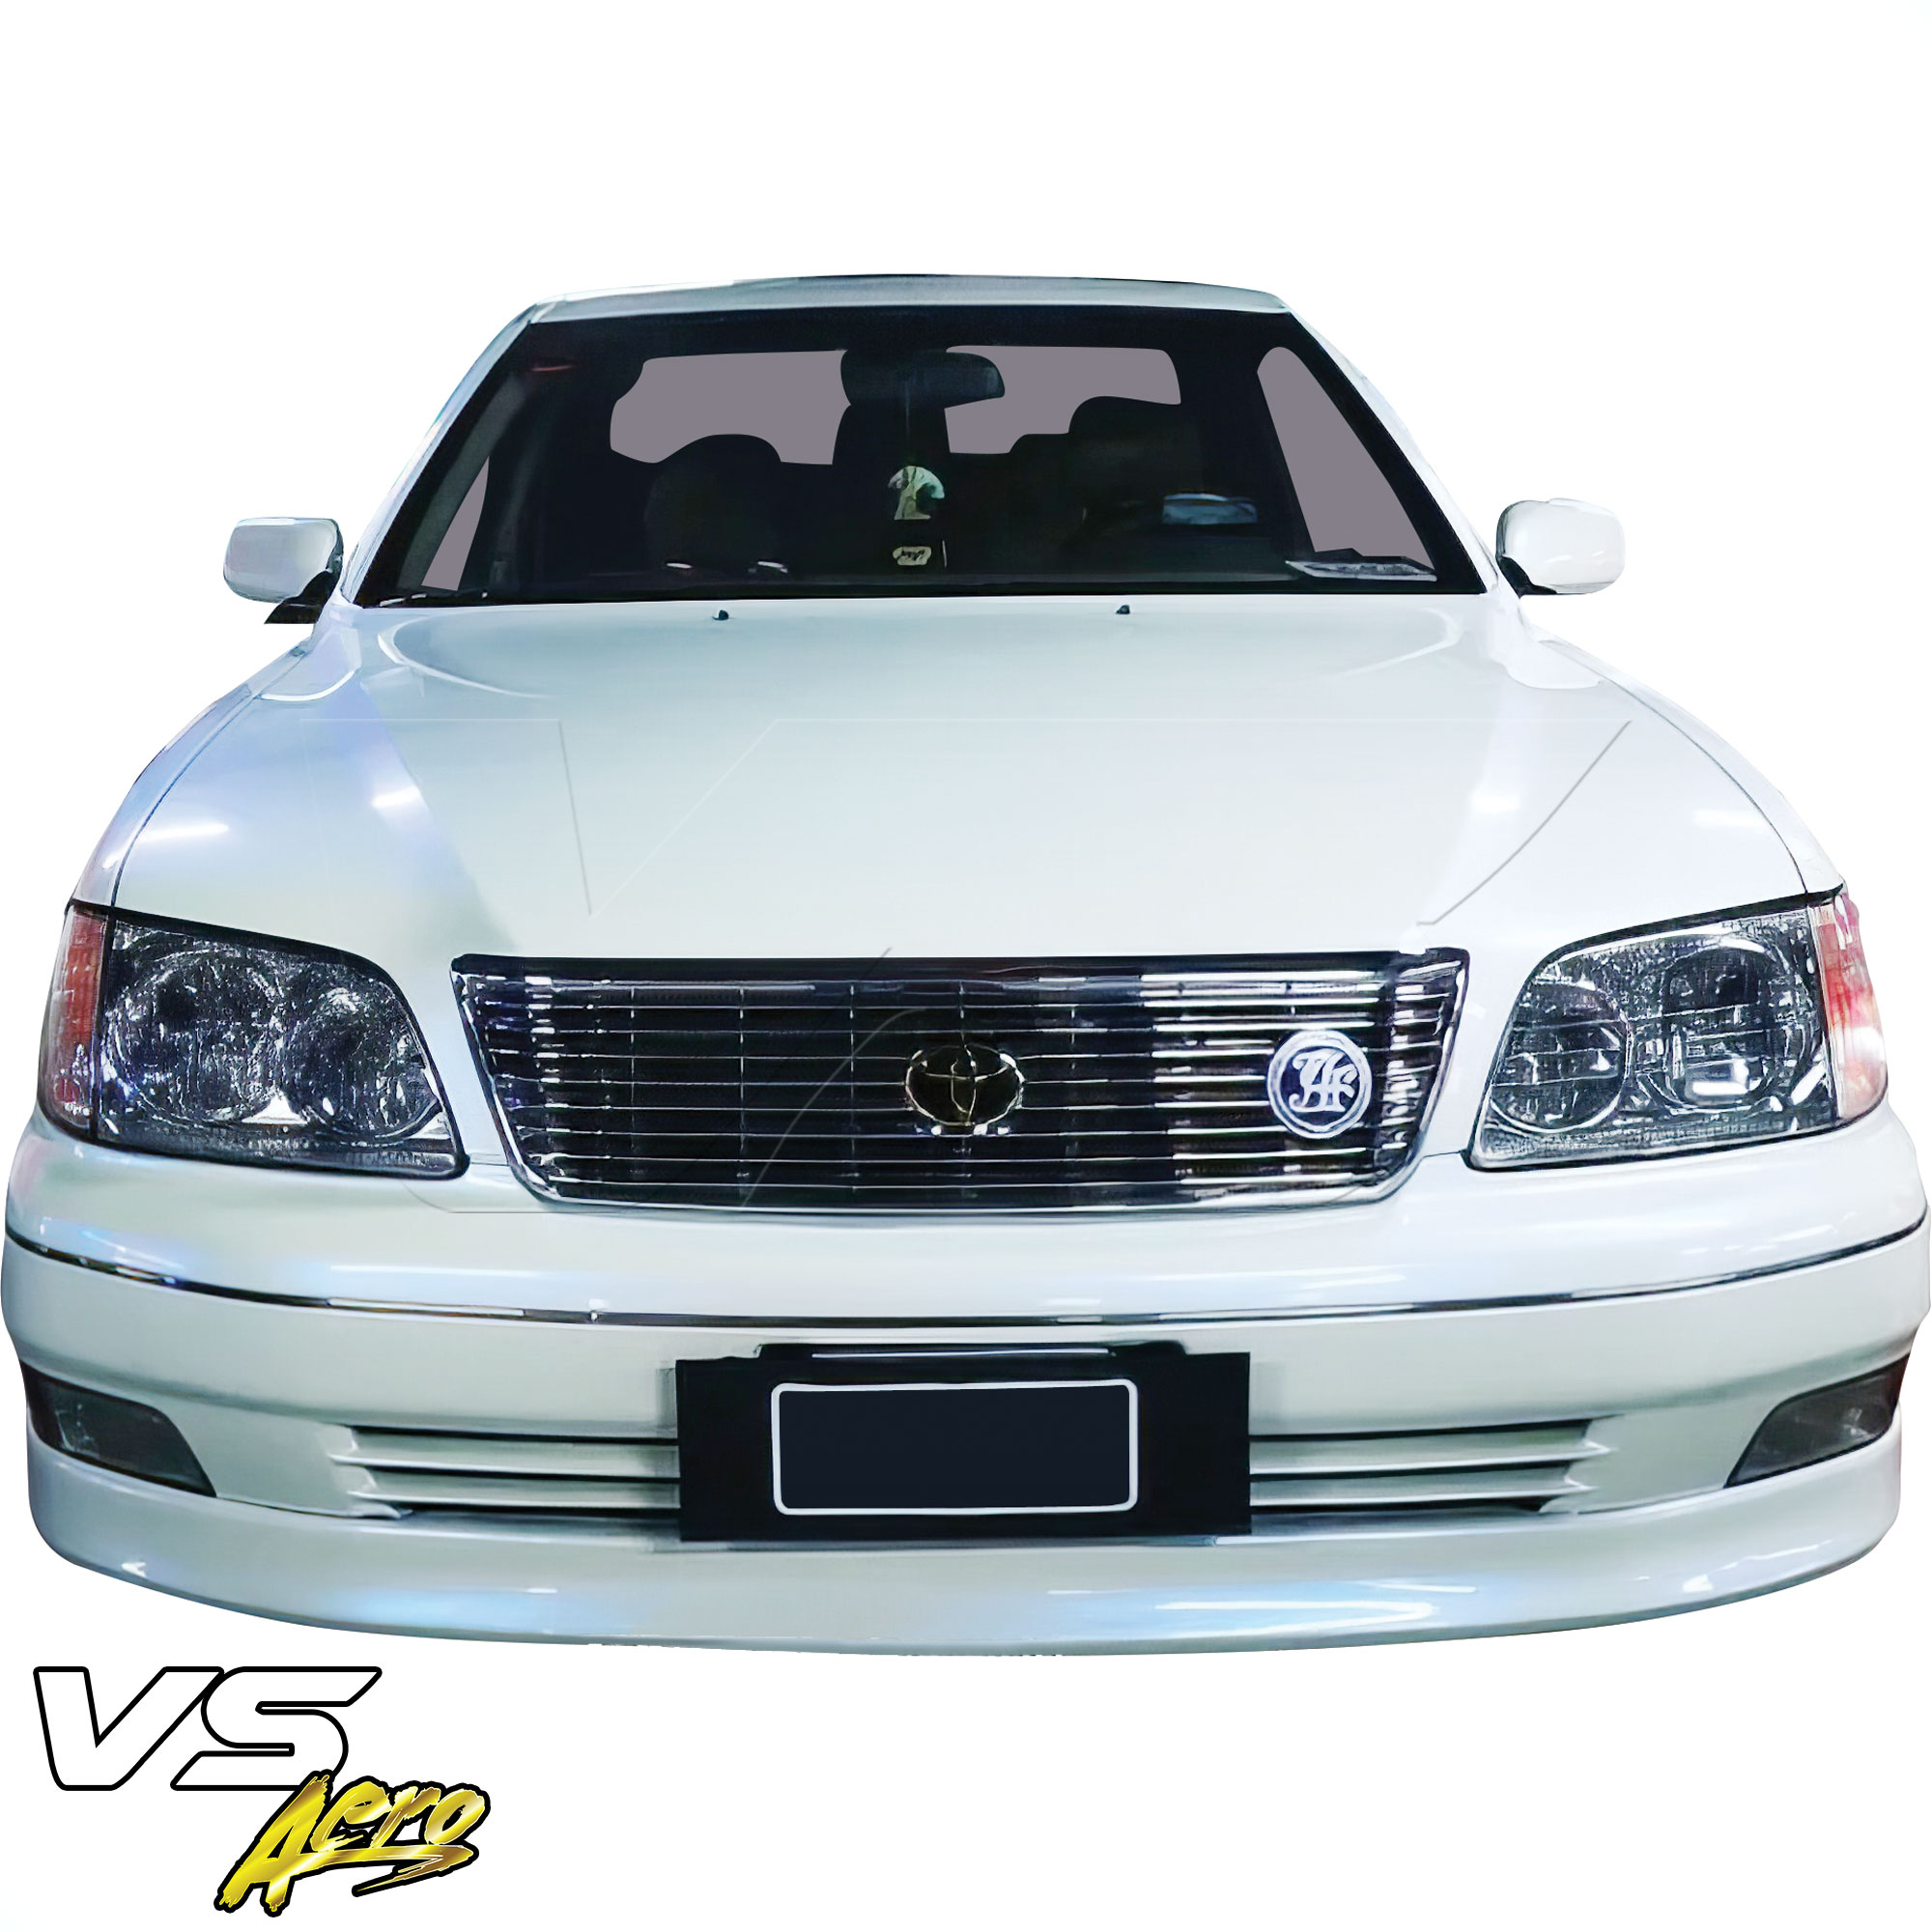 VSaero FRP FKON Front Lip Valance > Lexus LS400 UCF21 1998-2000 - Image 6